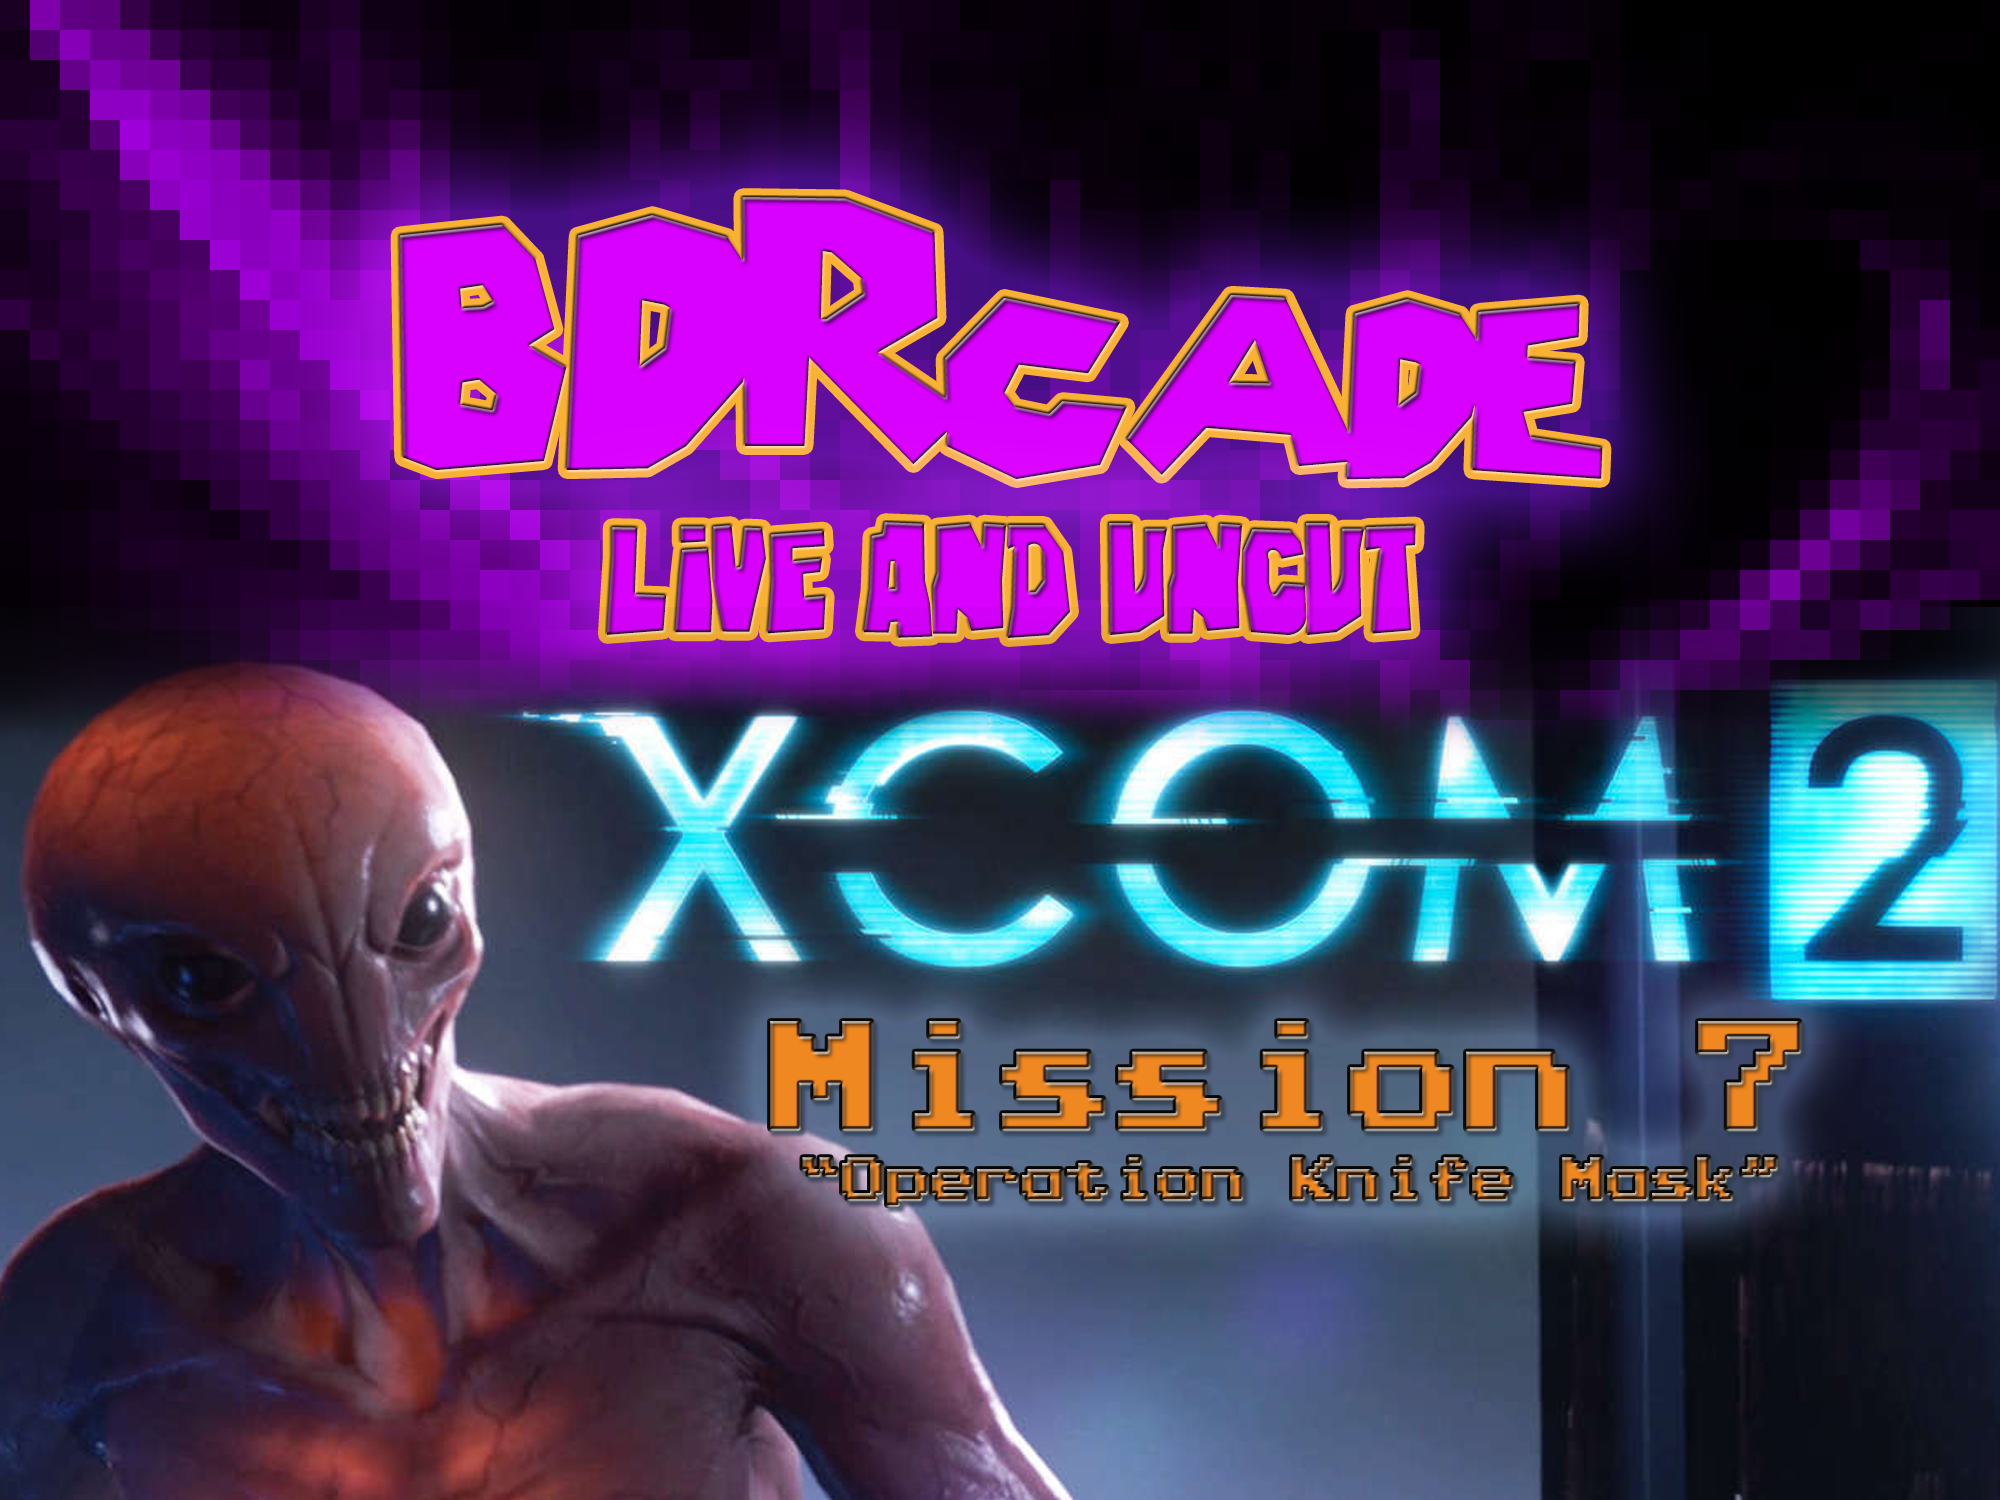 XCOM 2 – Mission 7 : “Operation Knife Mask” – A BDRcade Live Stream